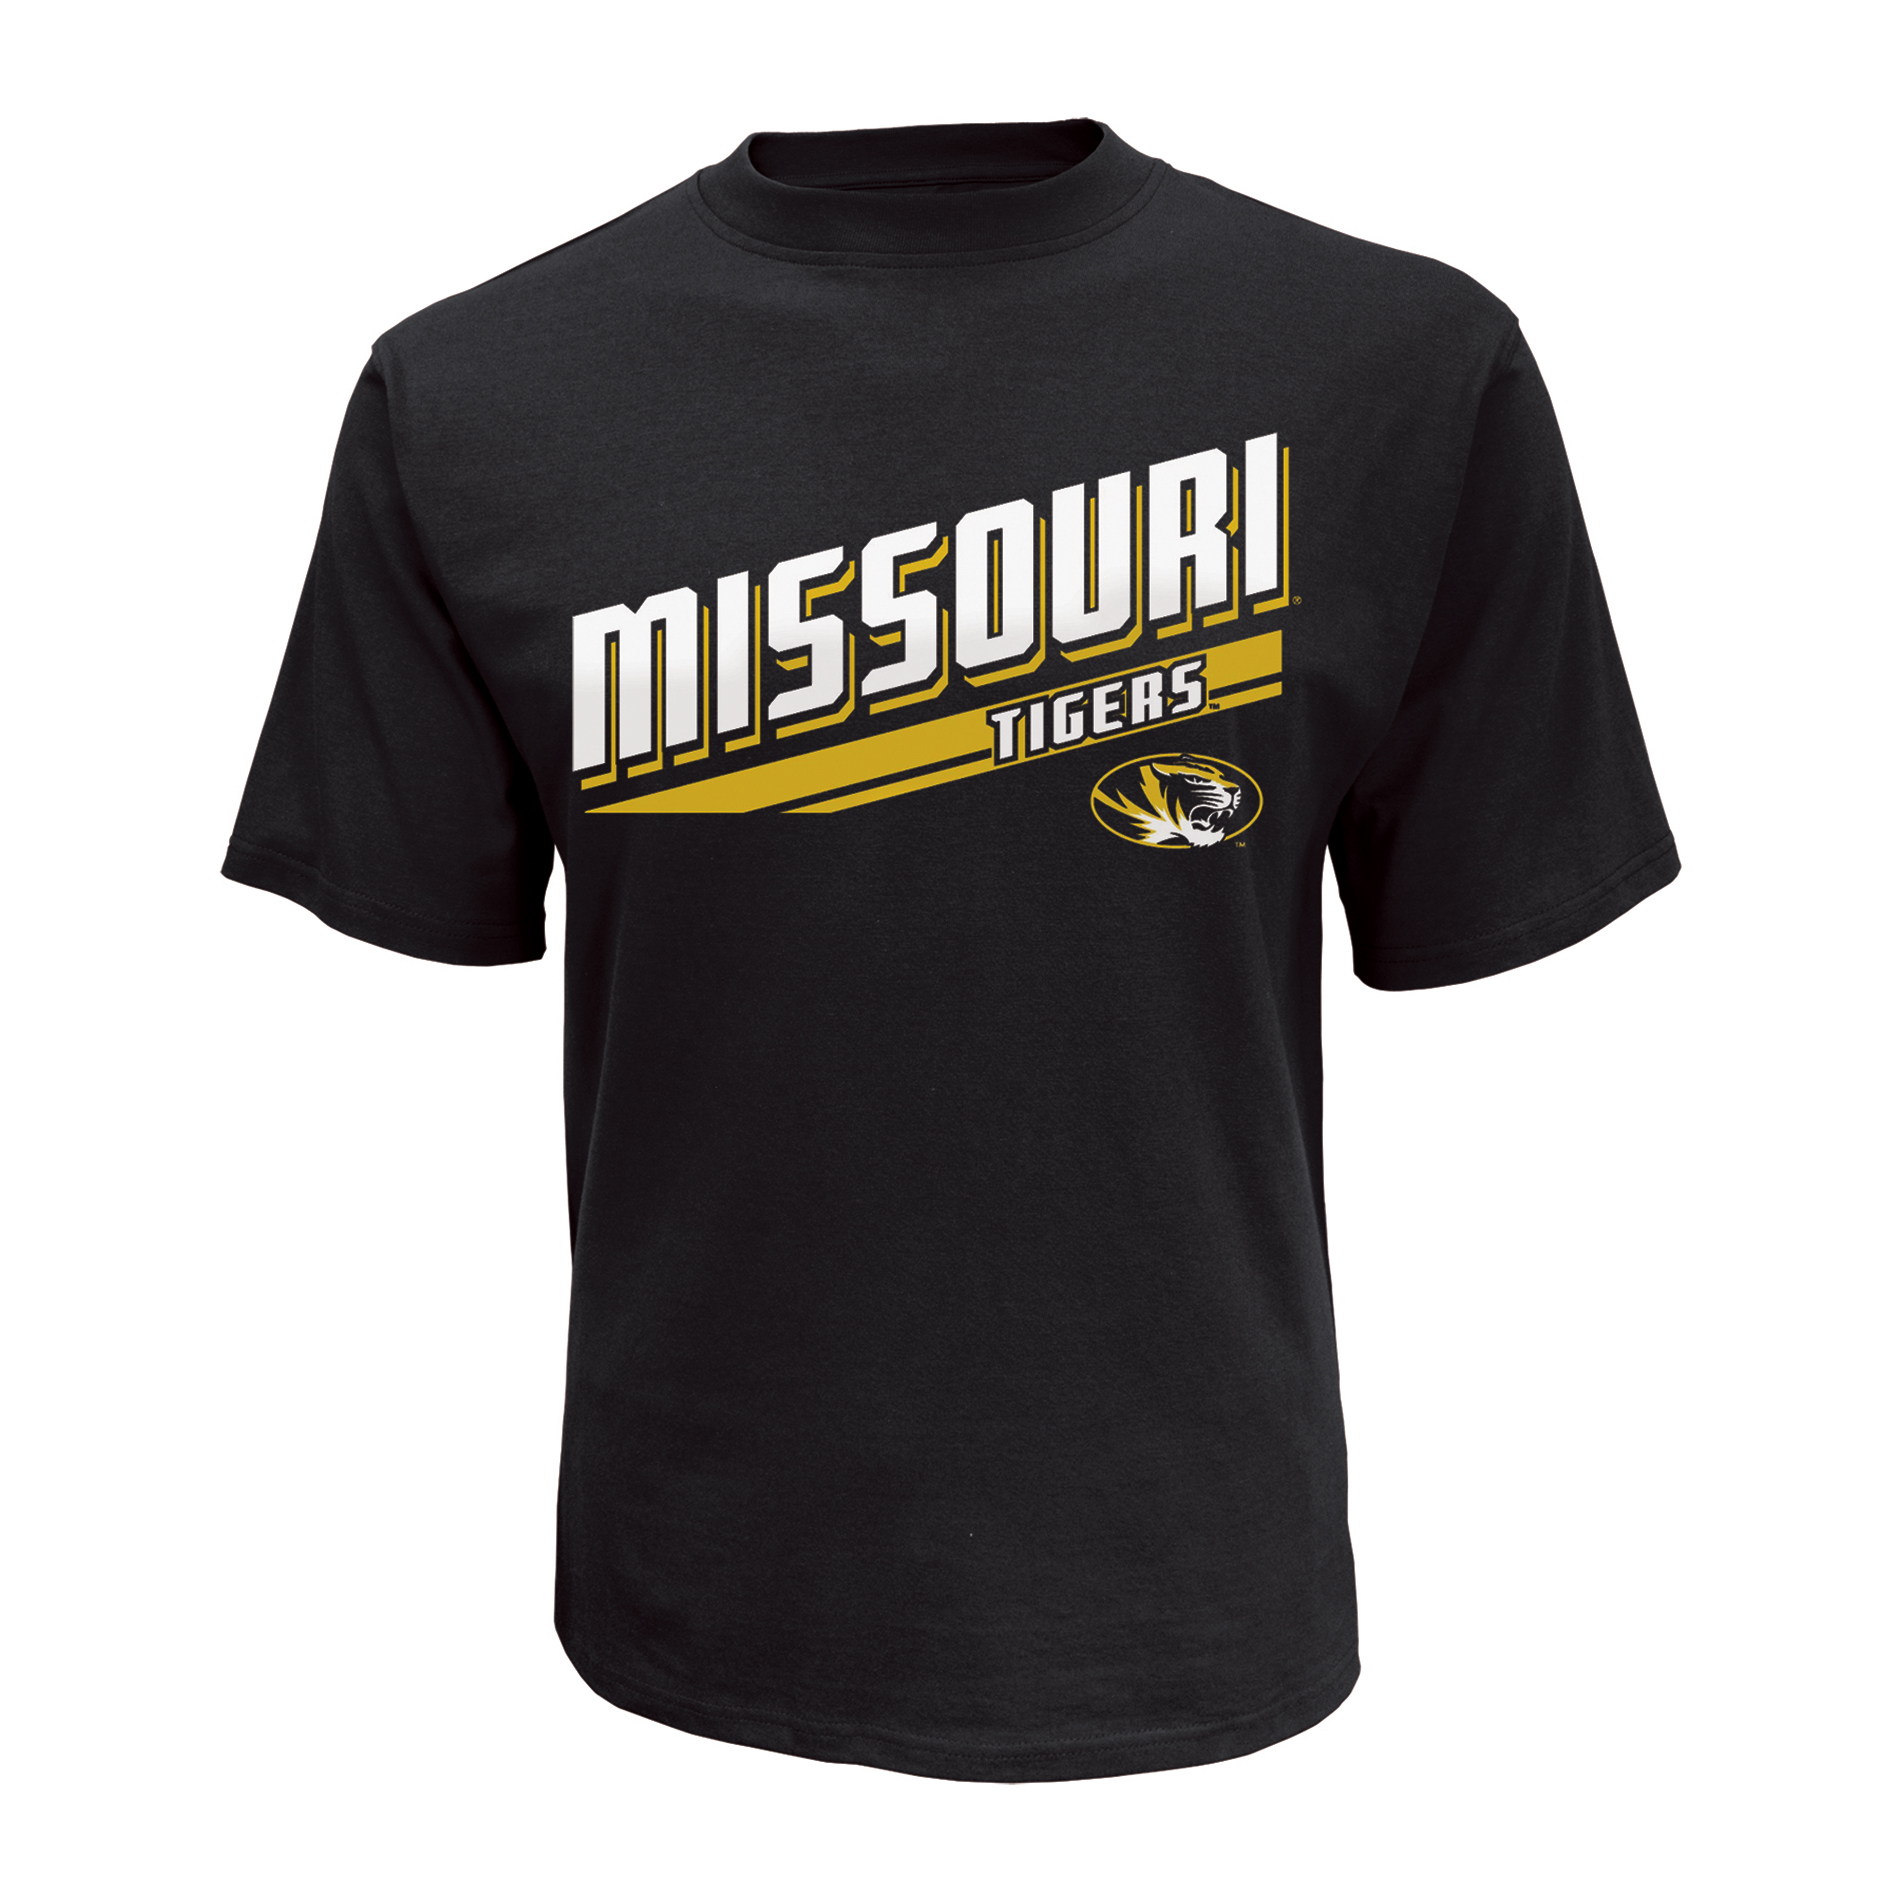 NCAA Men’s Short-Sleeve Graphic T-Shirt - Missouri Tigers